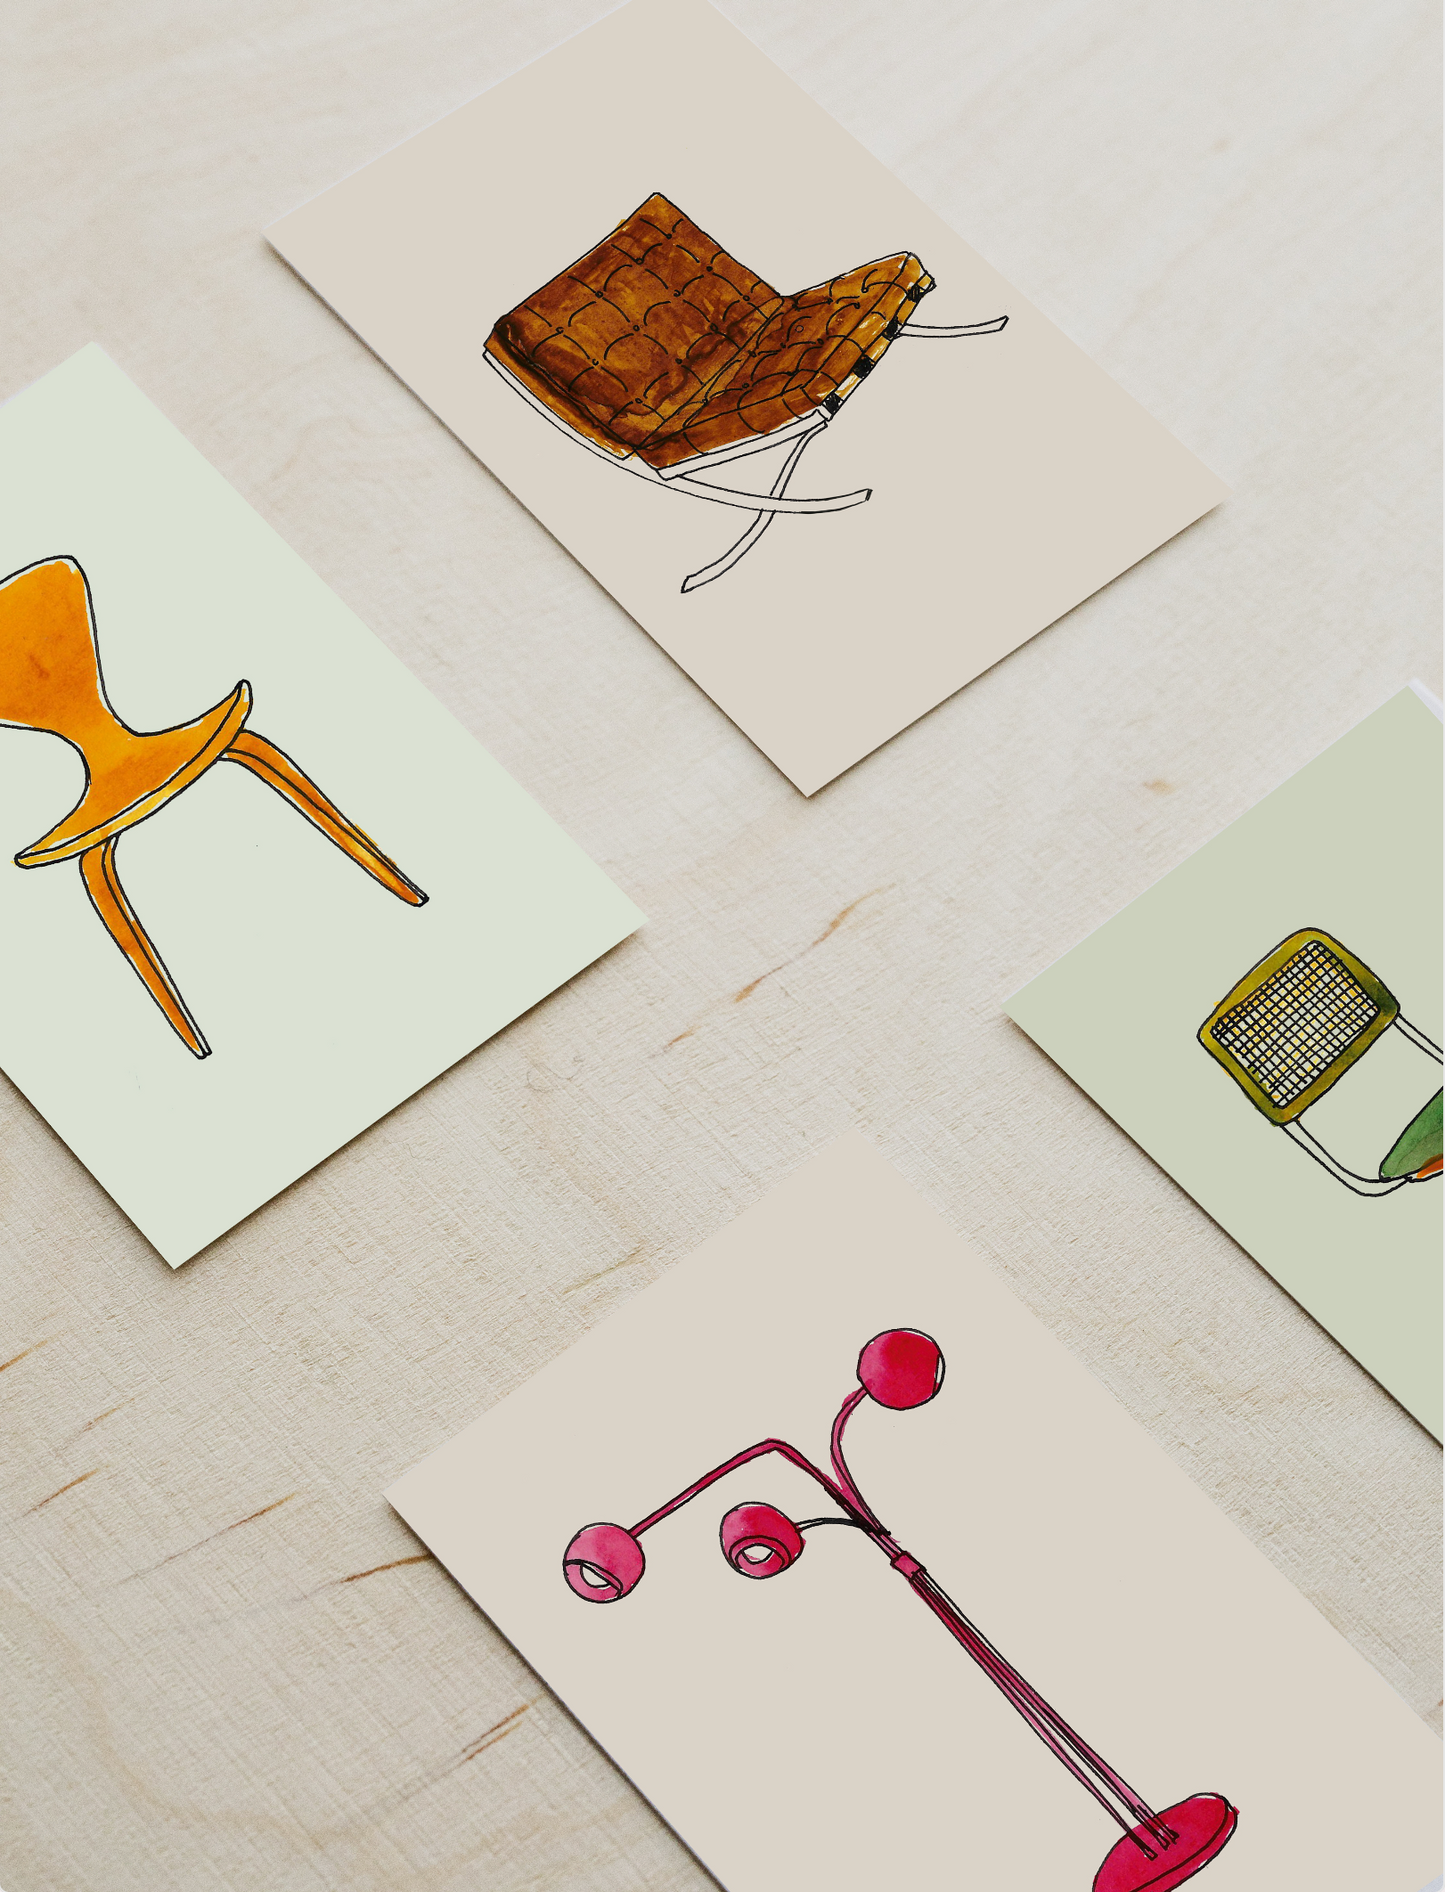 Pack of 10 Postcards of Midcentuy-Modern Furniture Illustrations